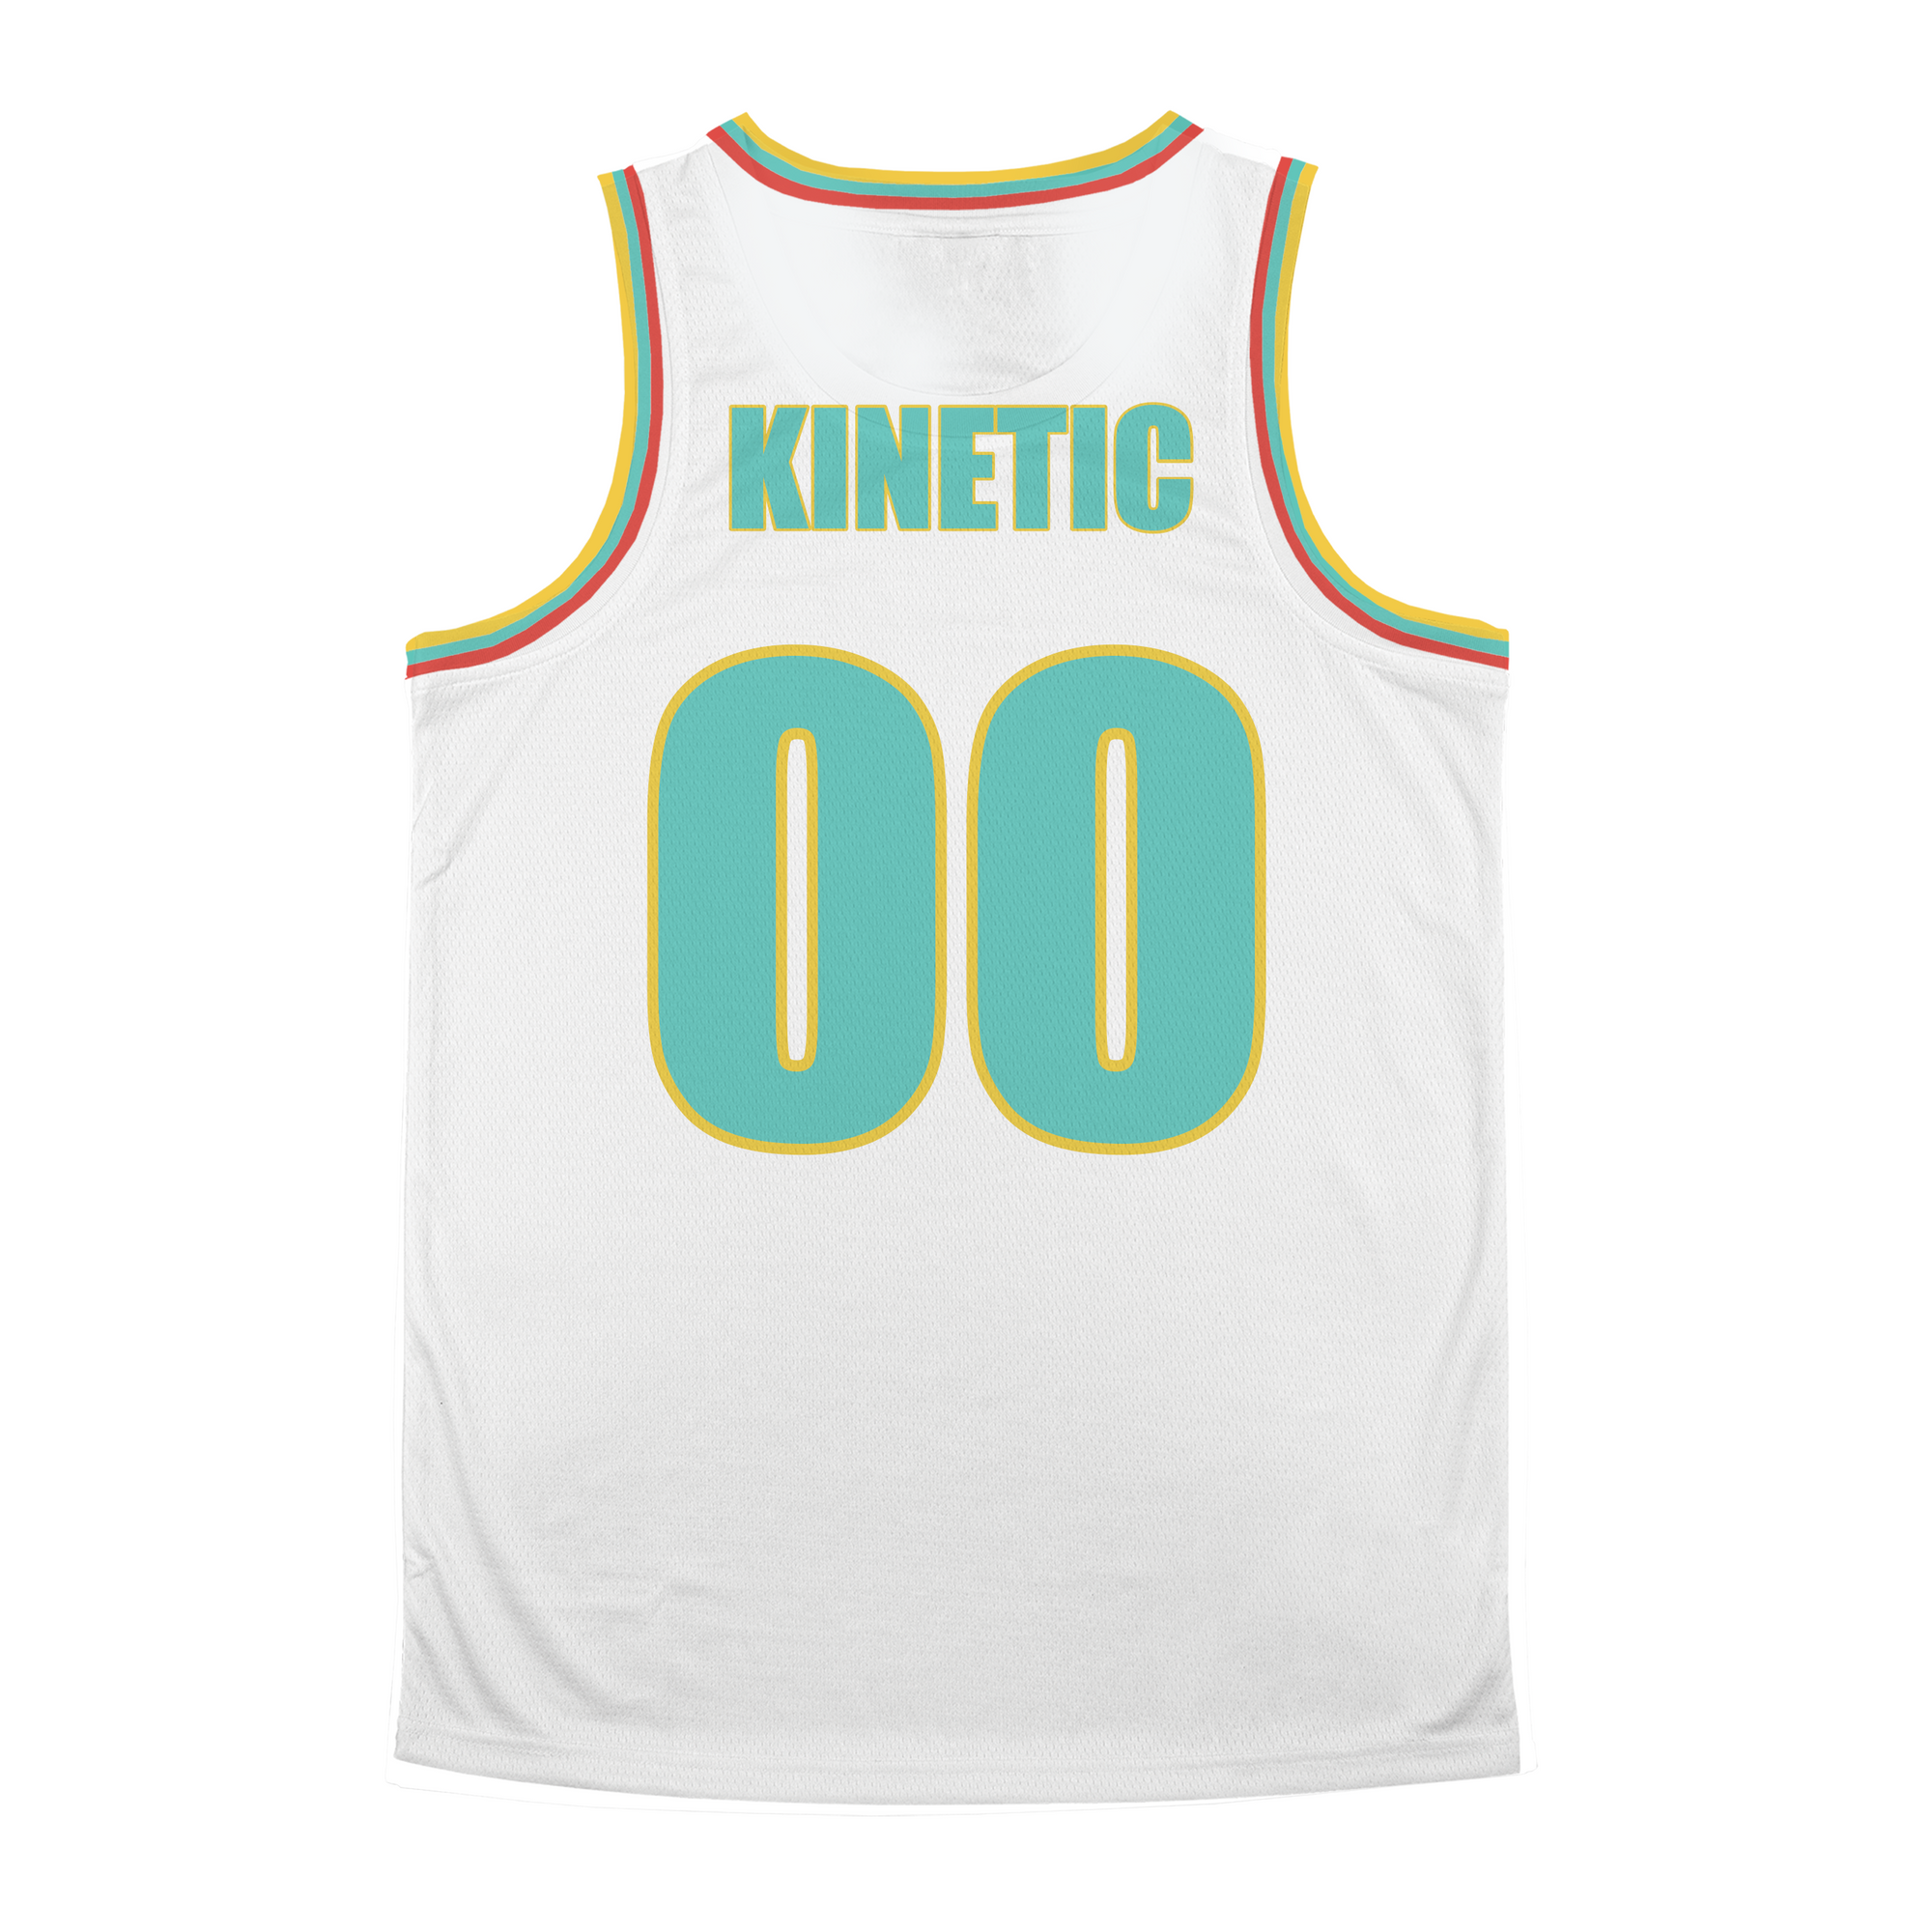 Kappa Alpha Order - Bolt Basketball Jersey